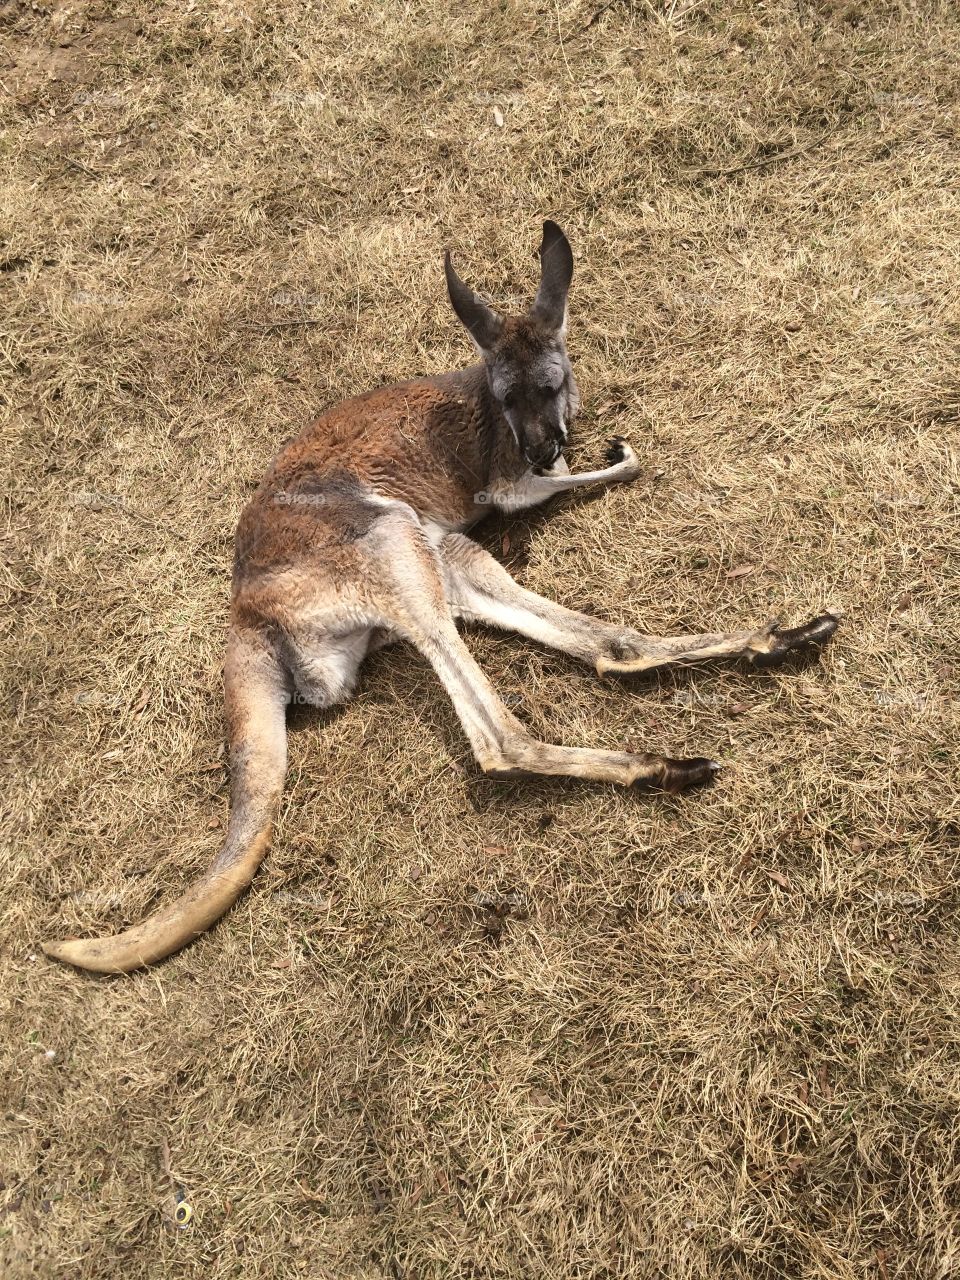 Kangaroo. This photo was taken on an iPhone 6s. 